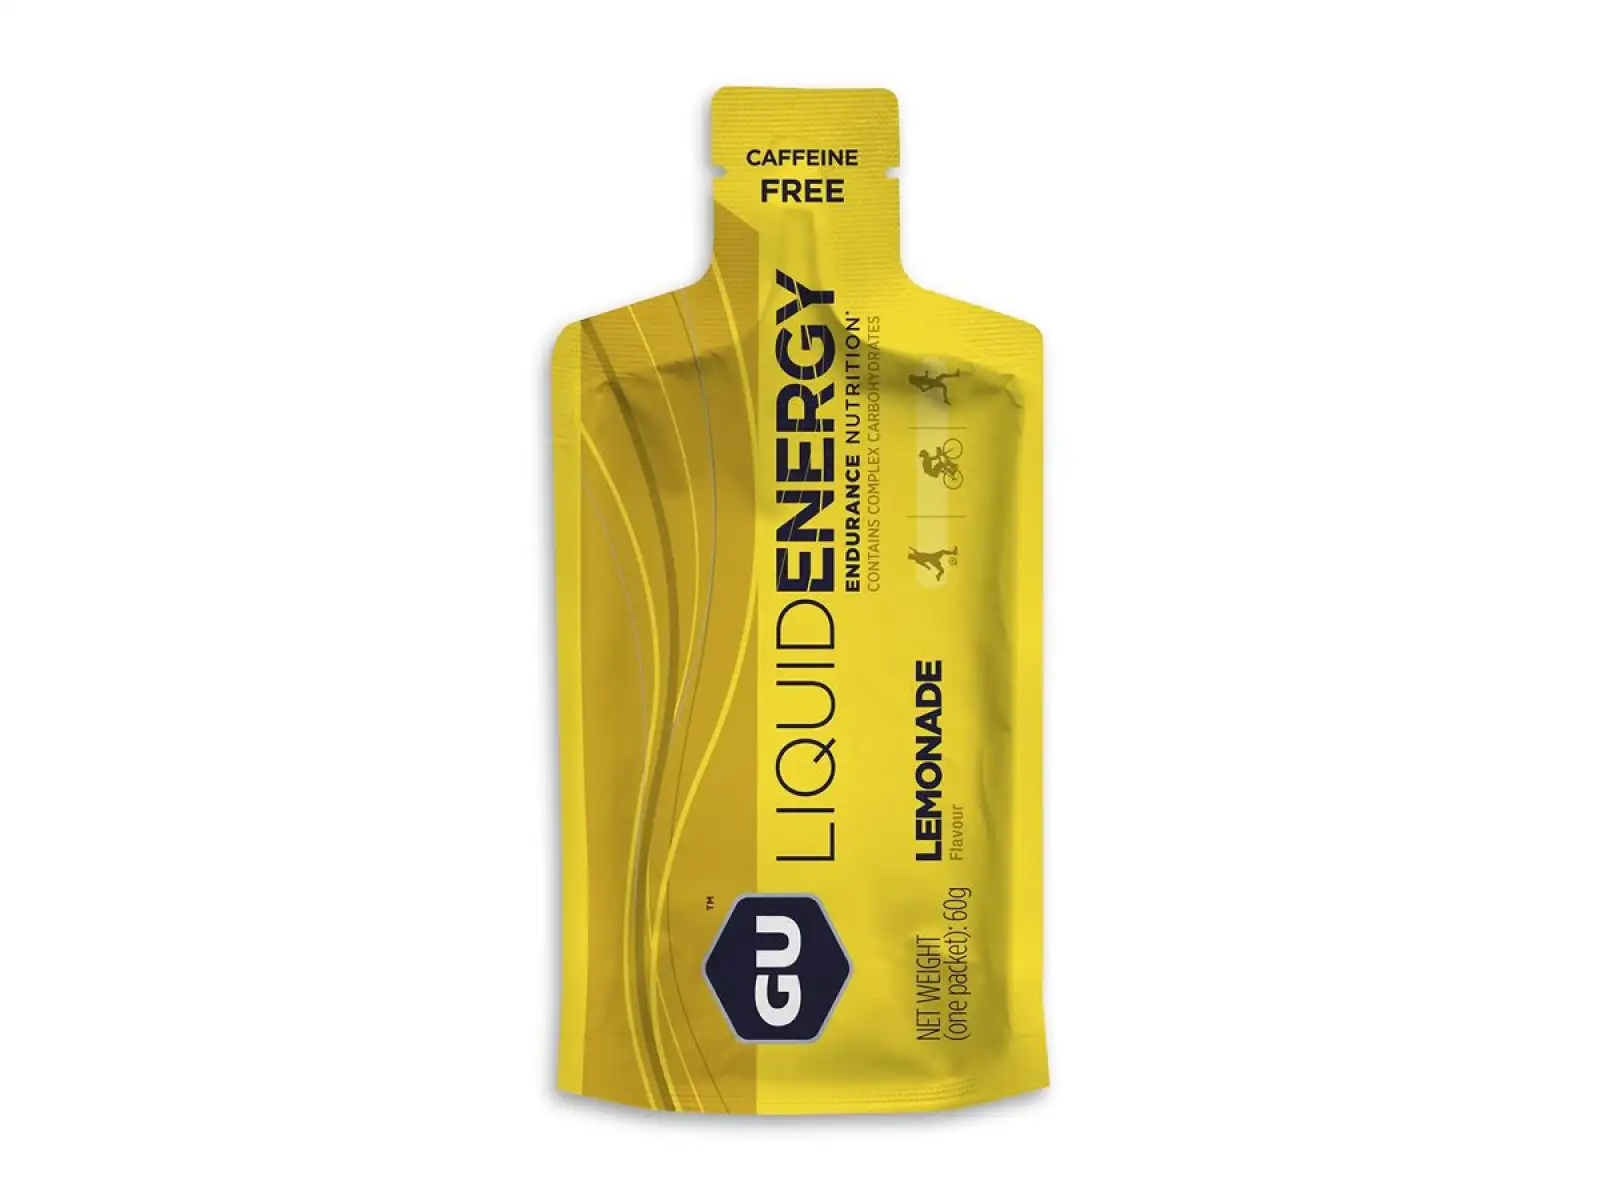 GU Liquid Energy Gel Lemonade sáček 60 g